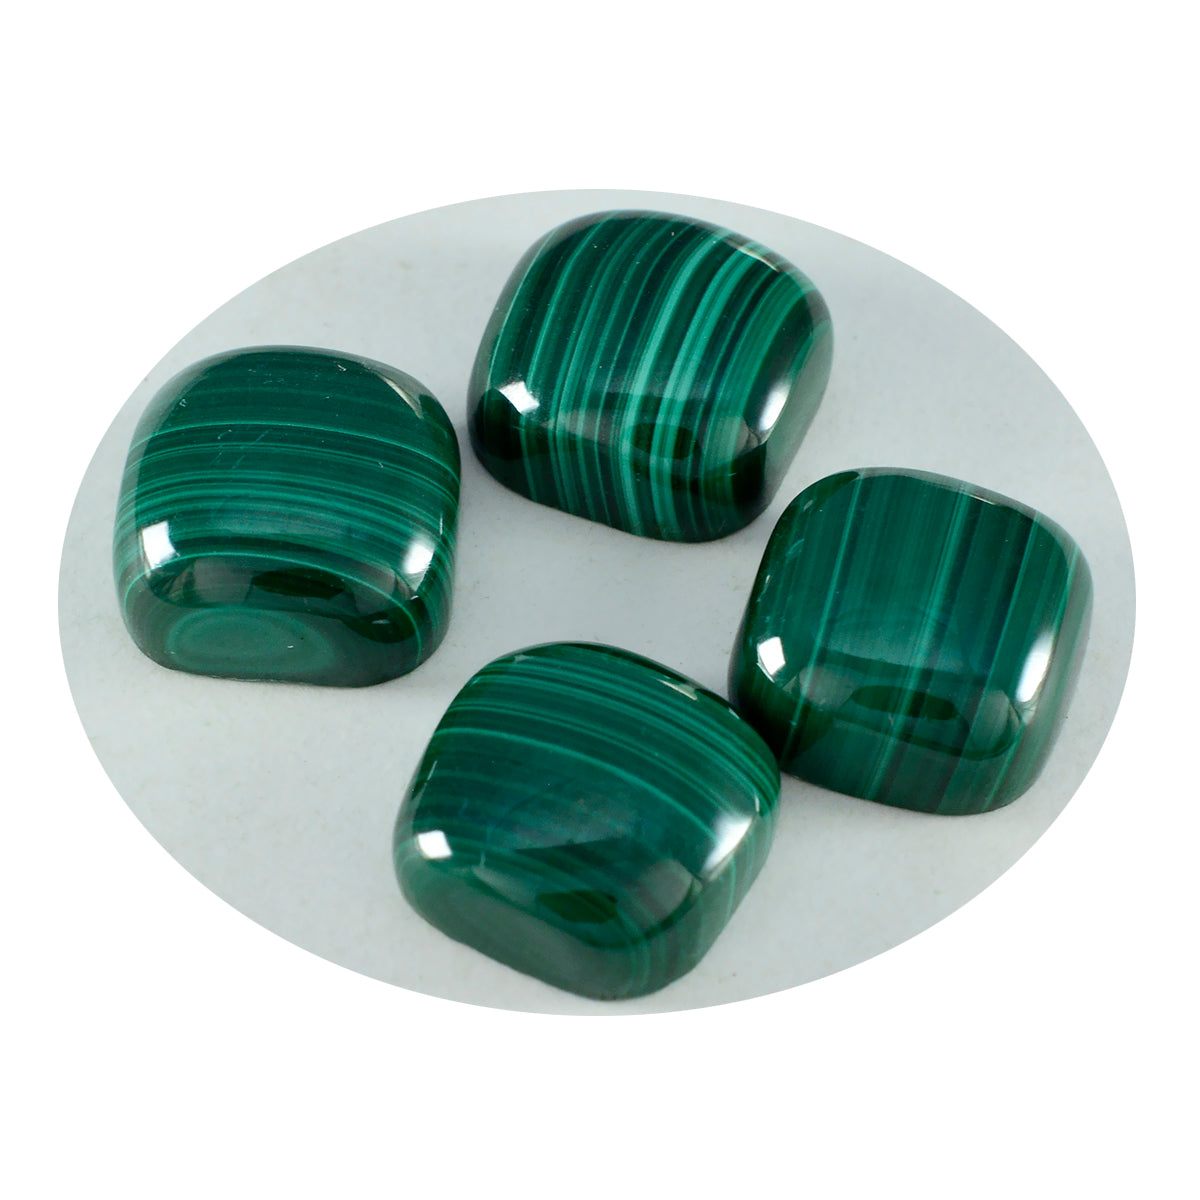 Riyogems 1PC Green Malachite Cabochon 7x7 mm Cushion Shape sweet Quality Gemstone